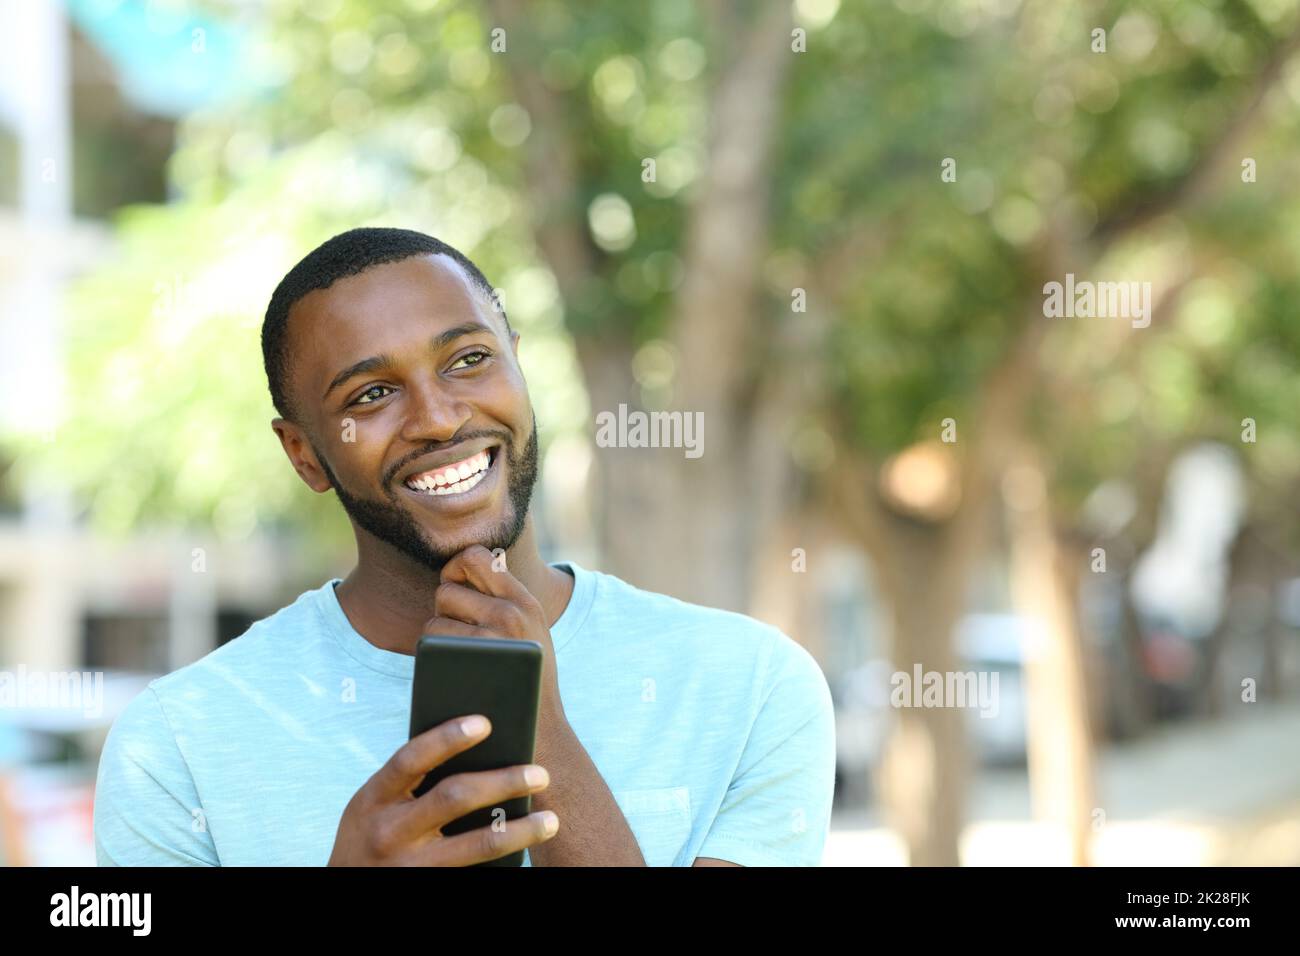 Happy man with black skin thinking holding phone Stock Photo